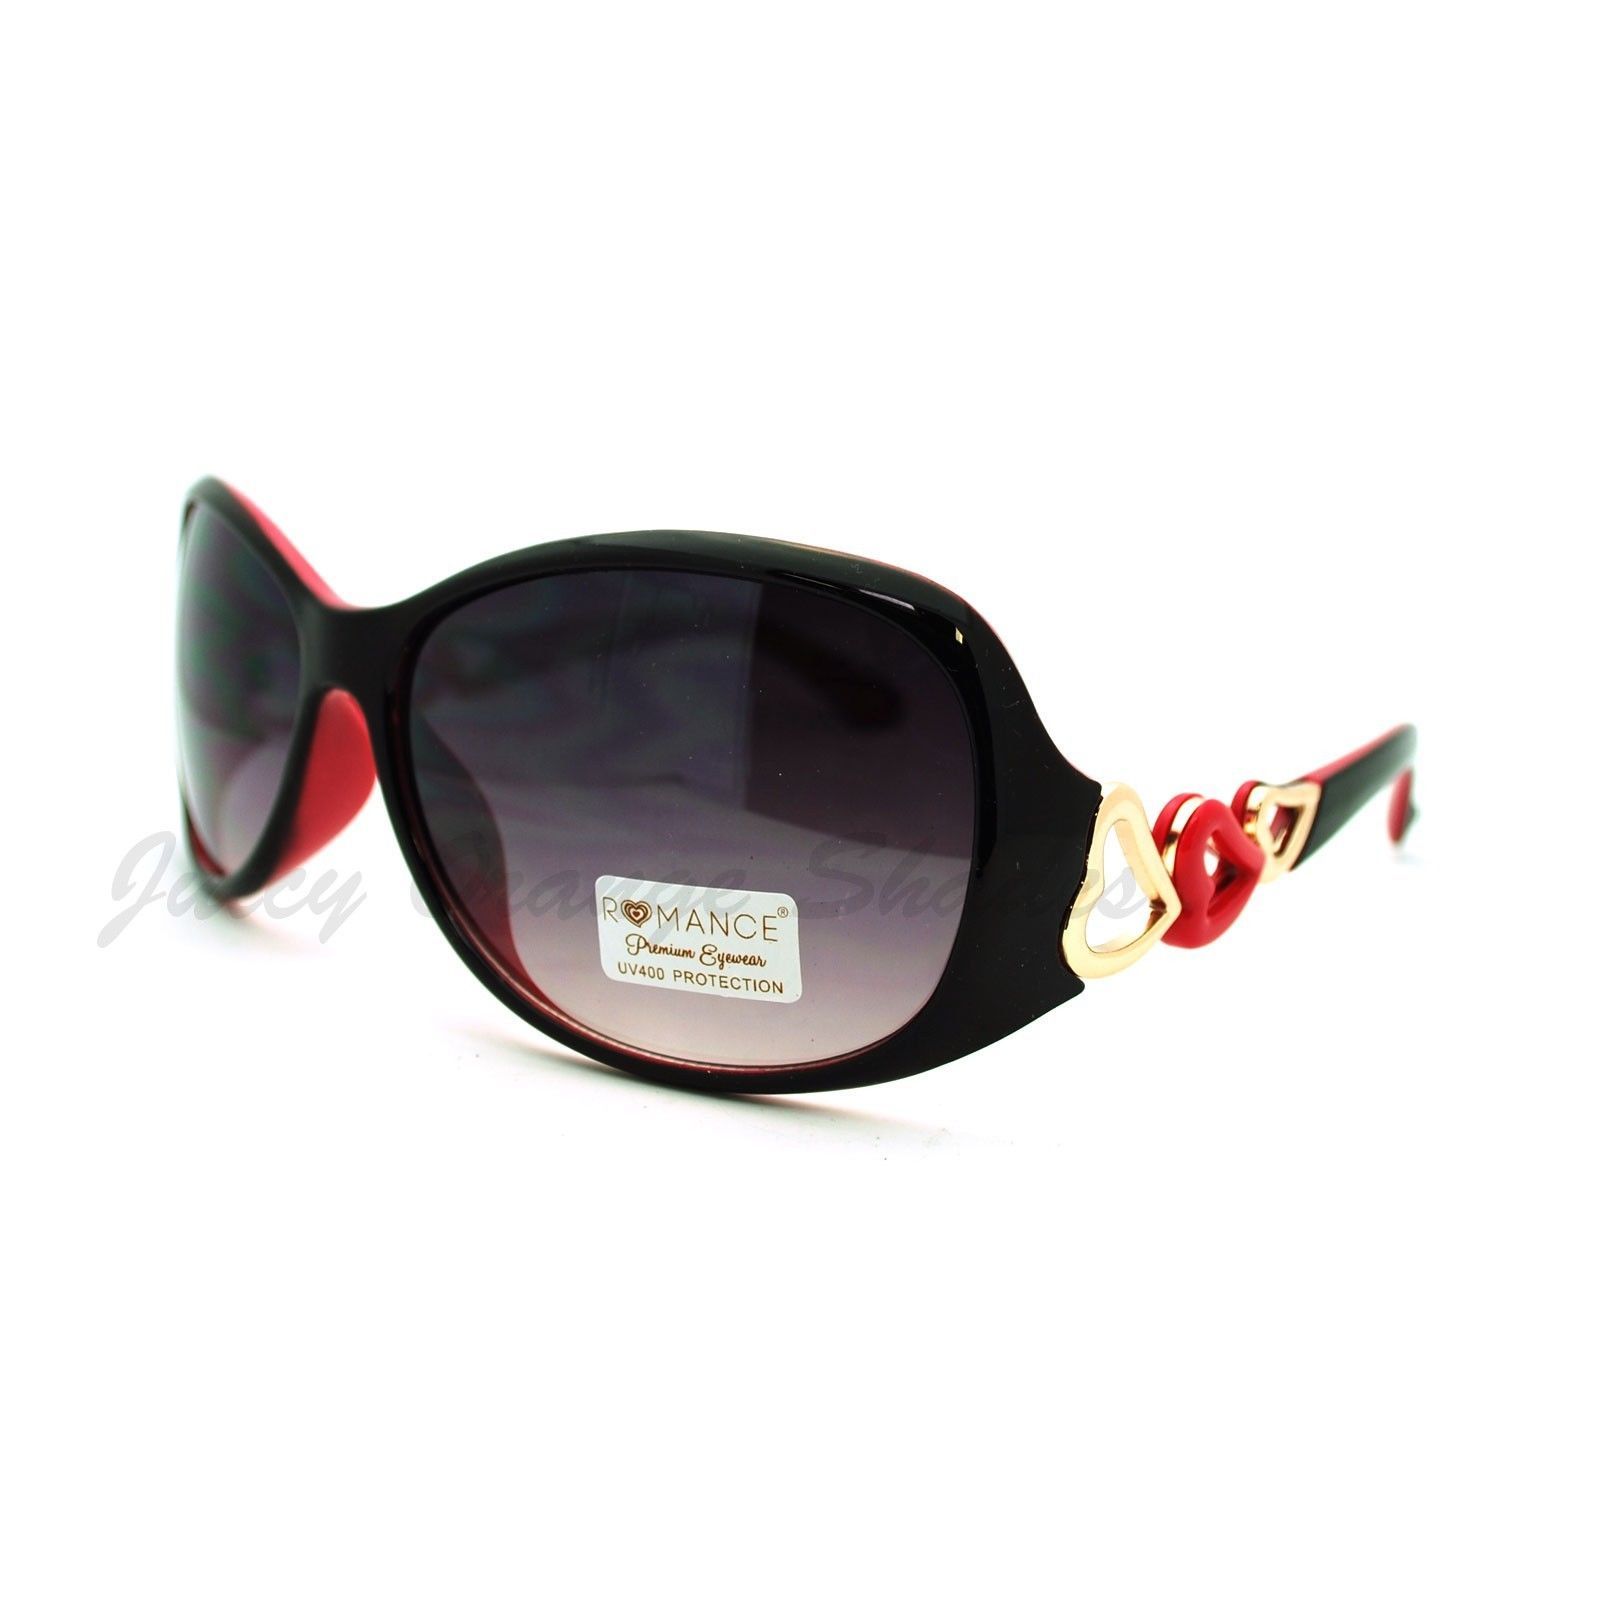 Women's Fashion Sunglasses Oval Round Frame Heart Design - $7.95